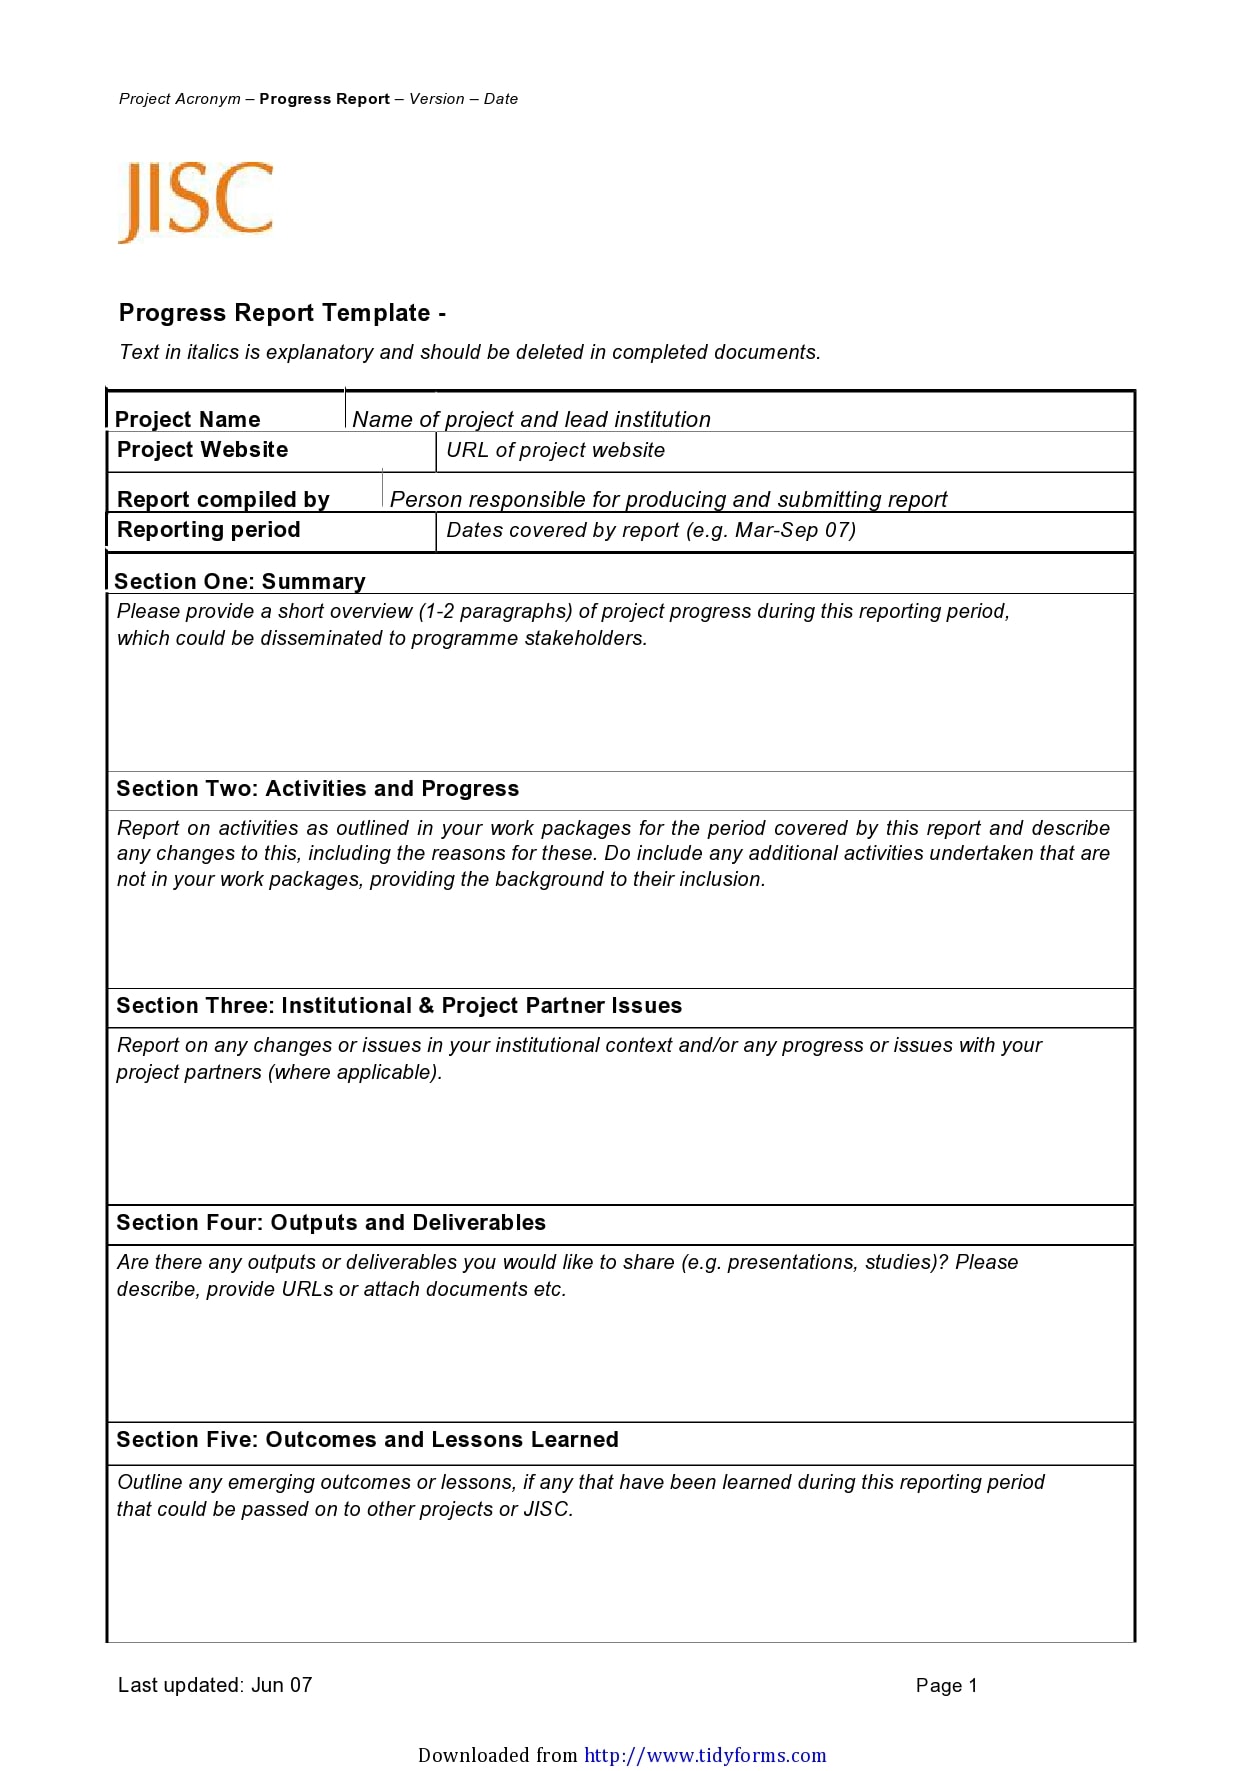 28 Professional Progress Report Templates (Free) - TemplateArchive